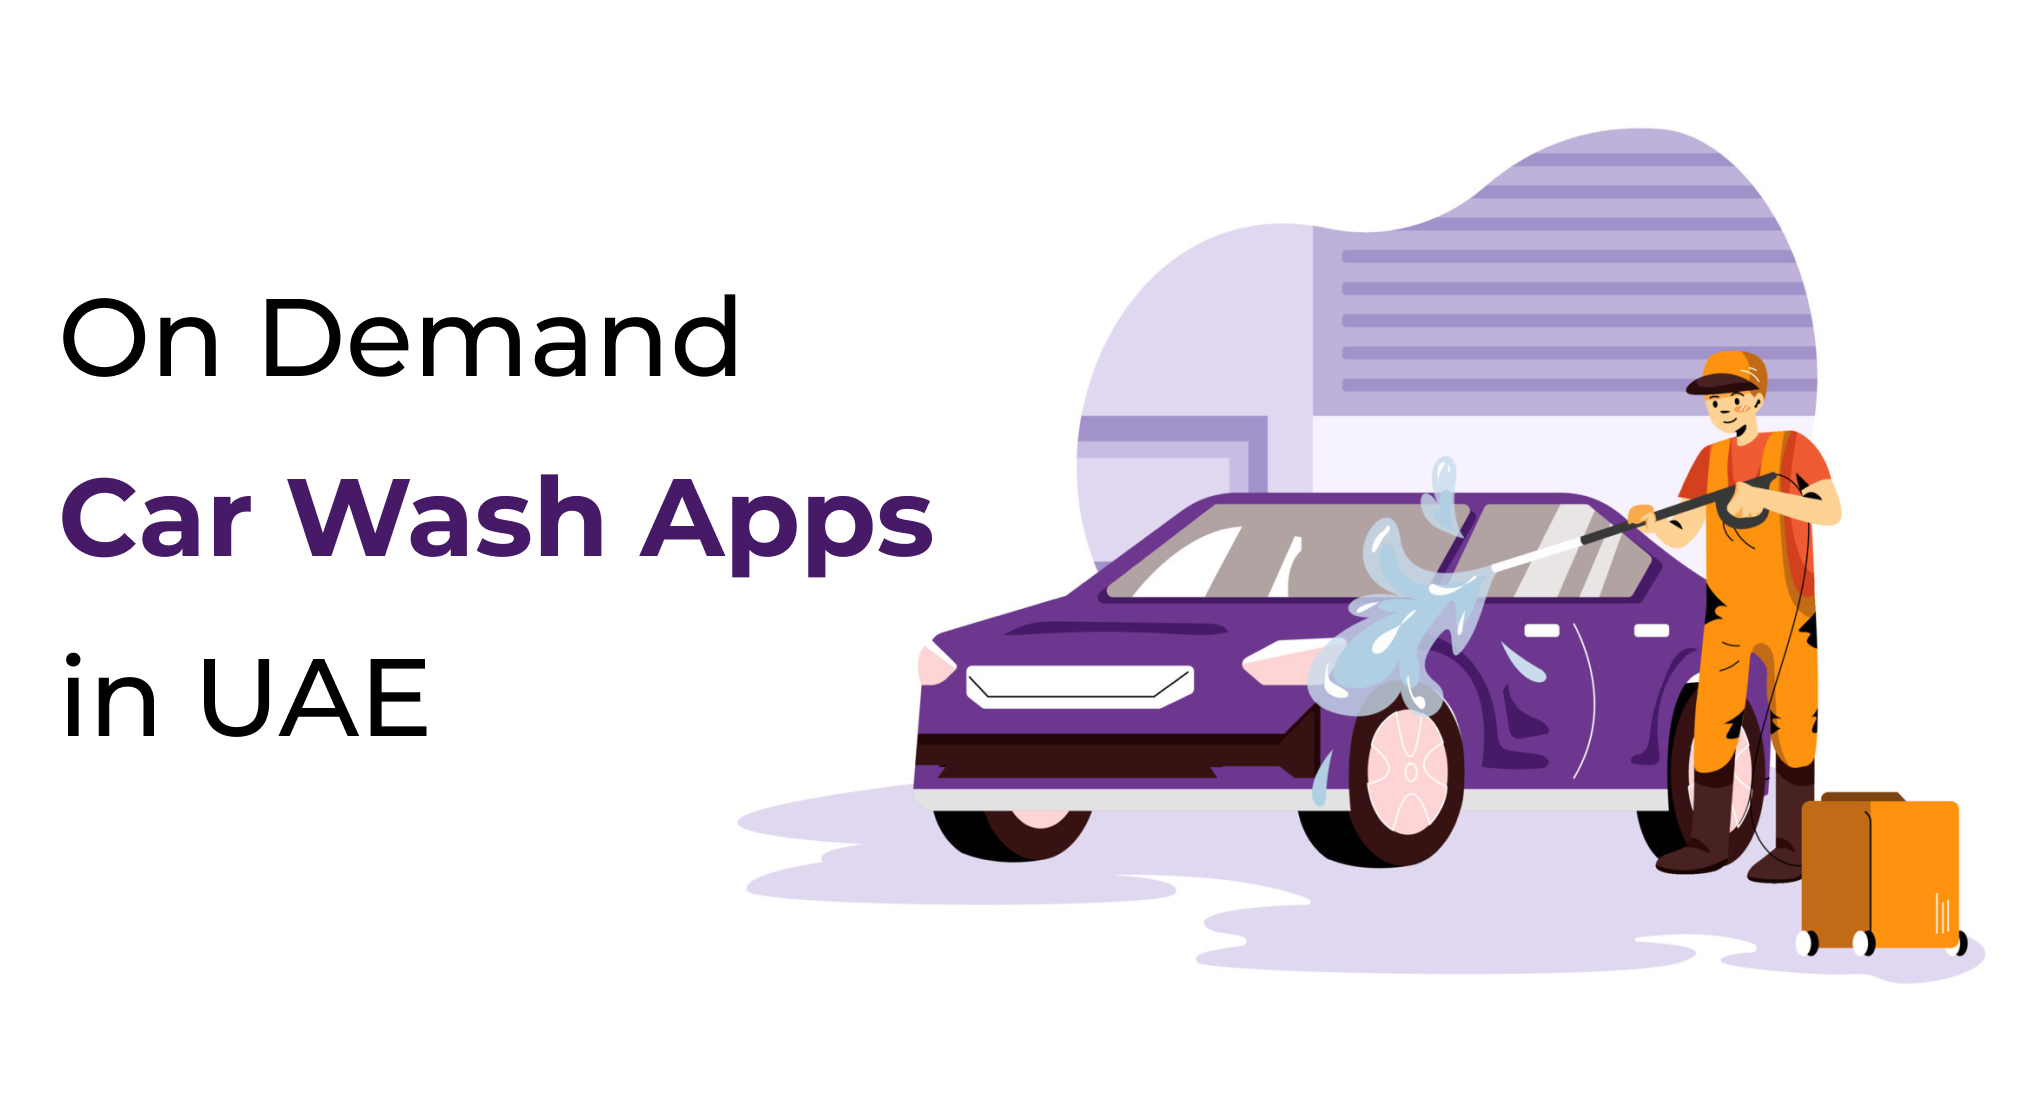 On Demand Car Wash Apps in UAE